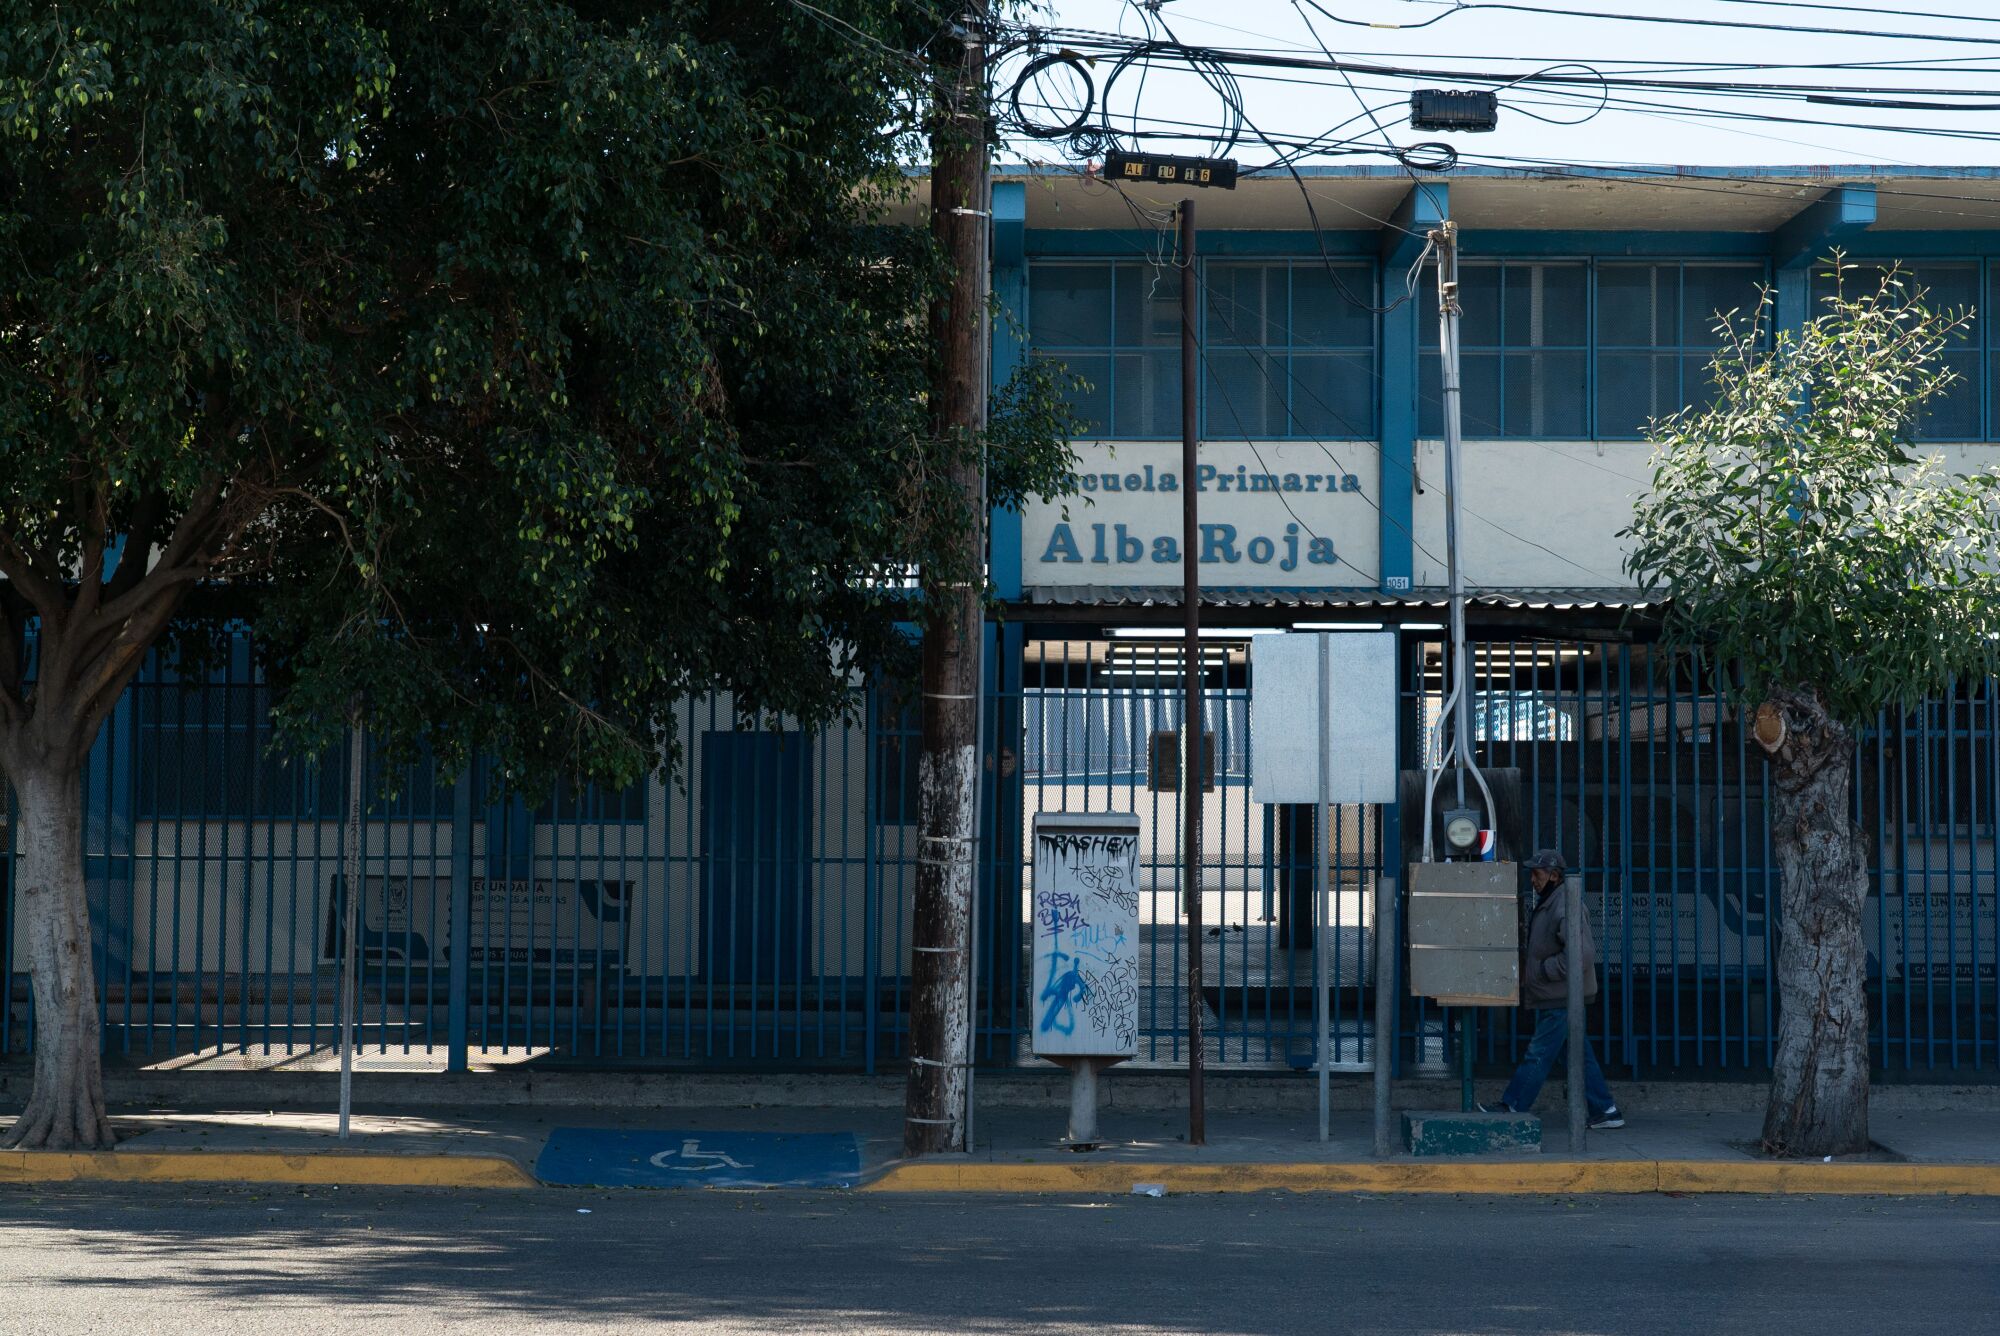 Sindicato Alba Roja Elementary School in downtown Tijuana 